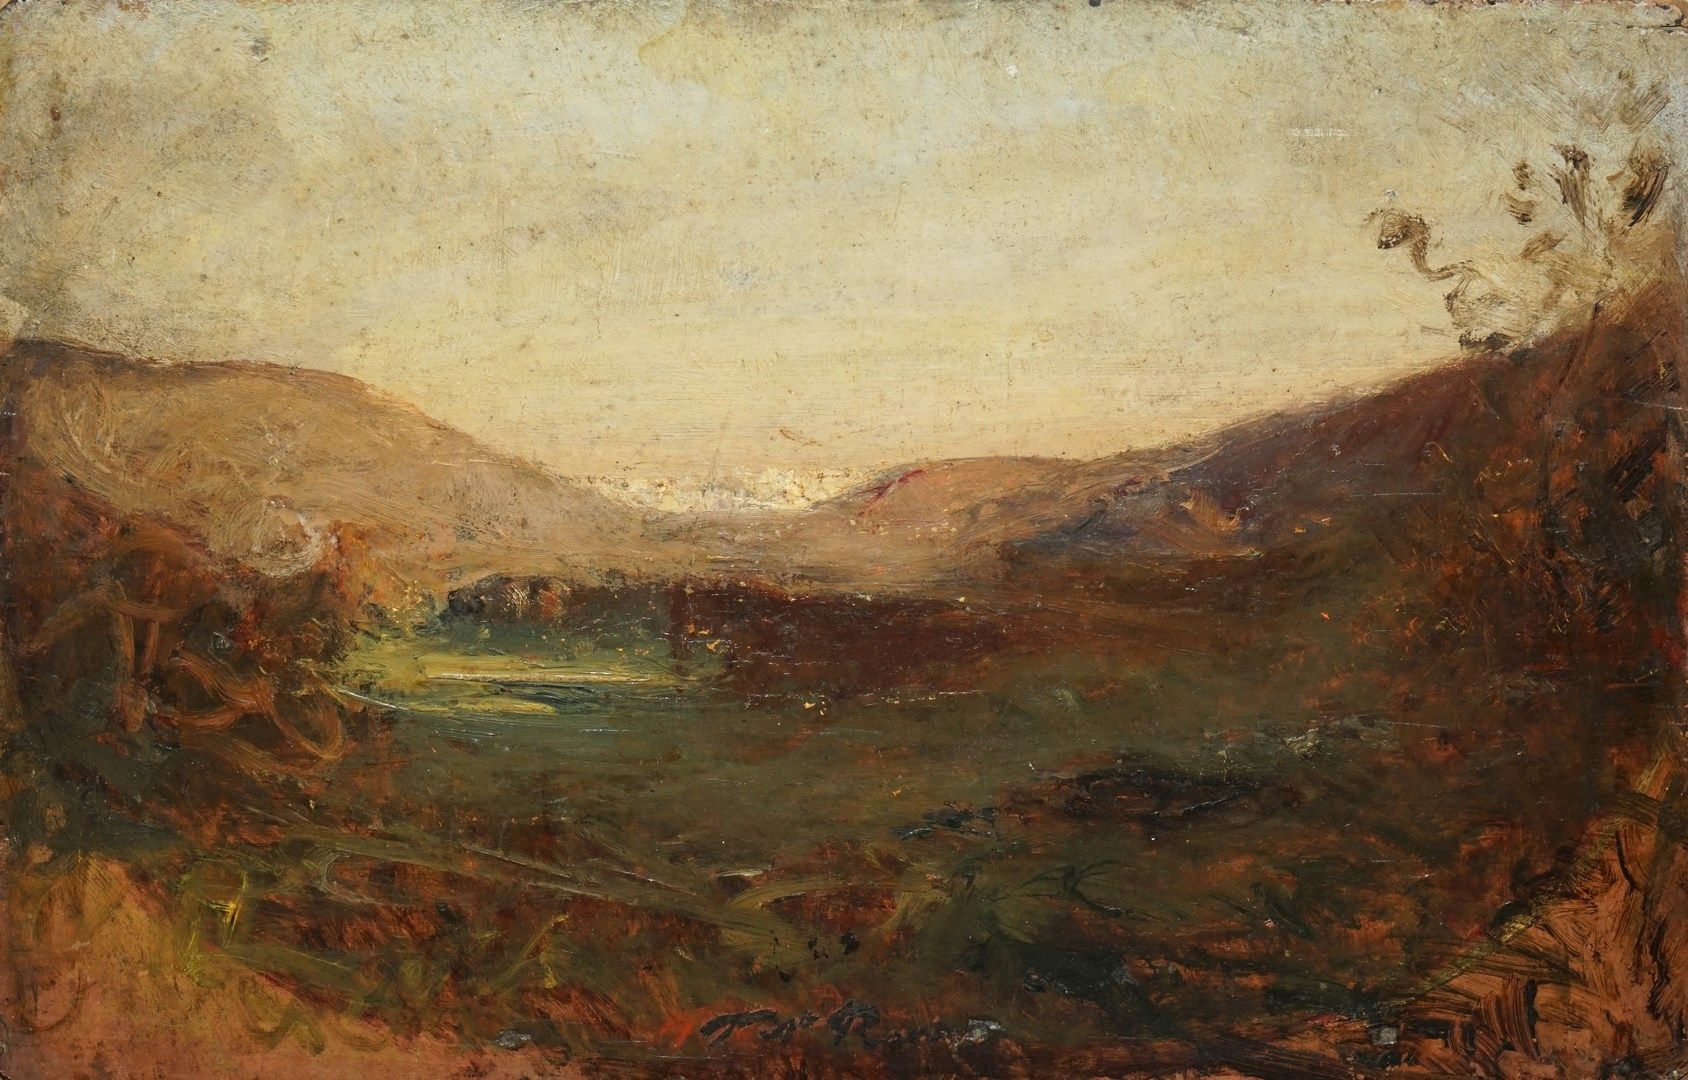 Null RAVIER Auguste, 1814-1895

全景图，可以看到山脉的景色

油画板上的双联画，以前有椭圆形的视图

(有磨损的痕迹，油漆层被弄&hellip;